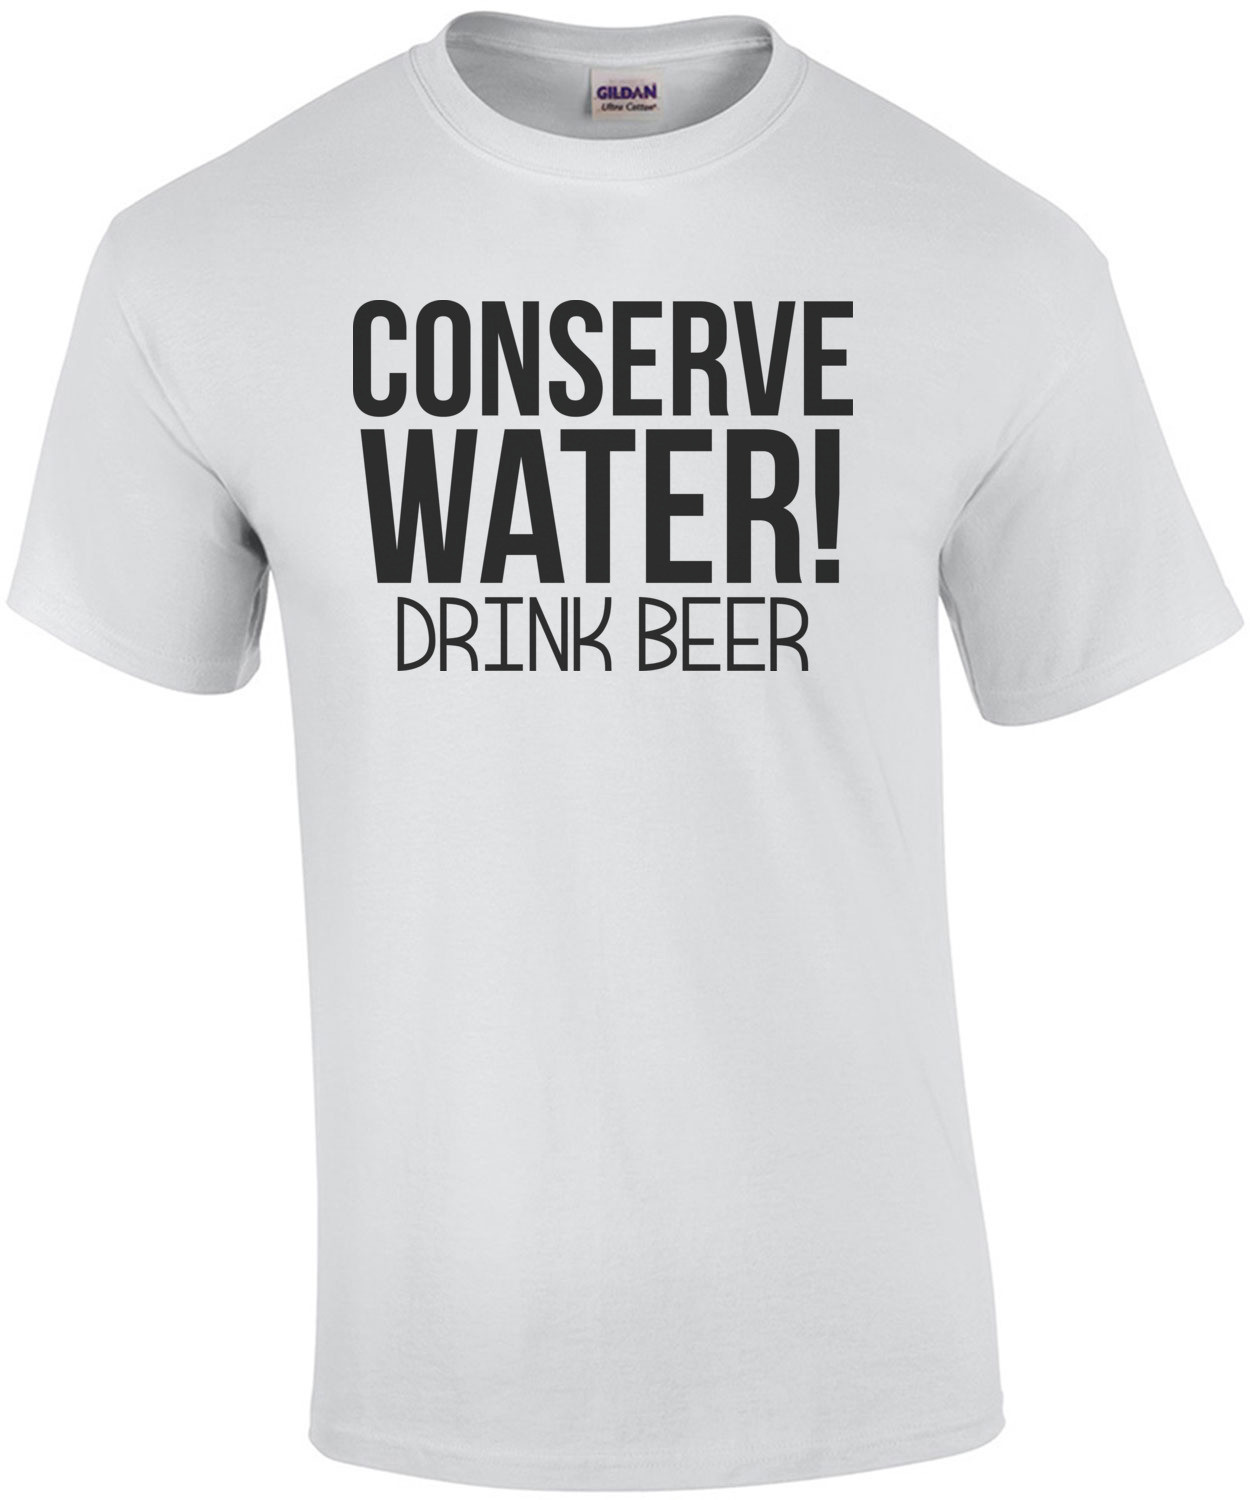 Conserve Water! Drink Beer